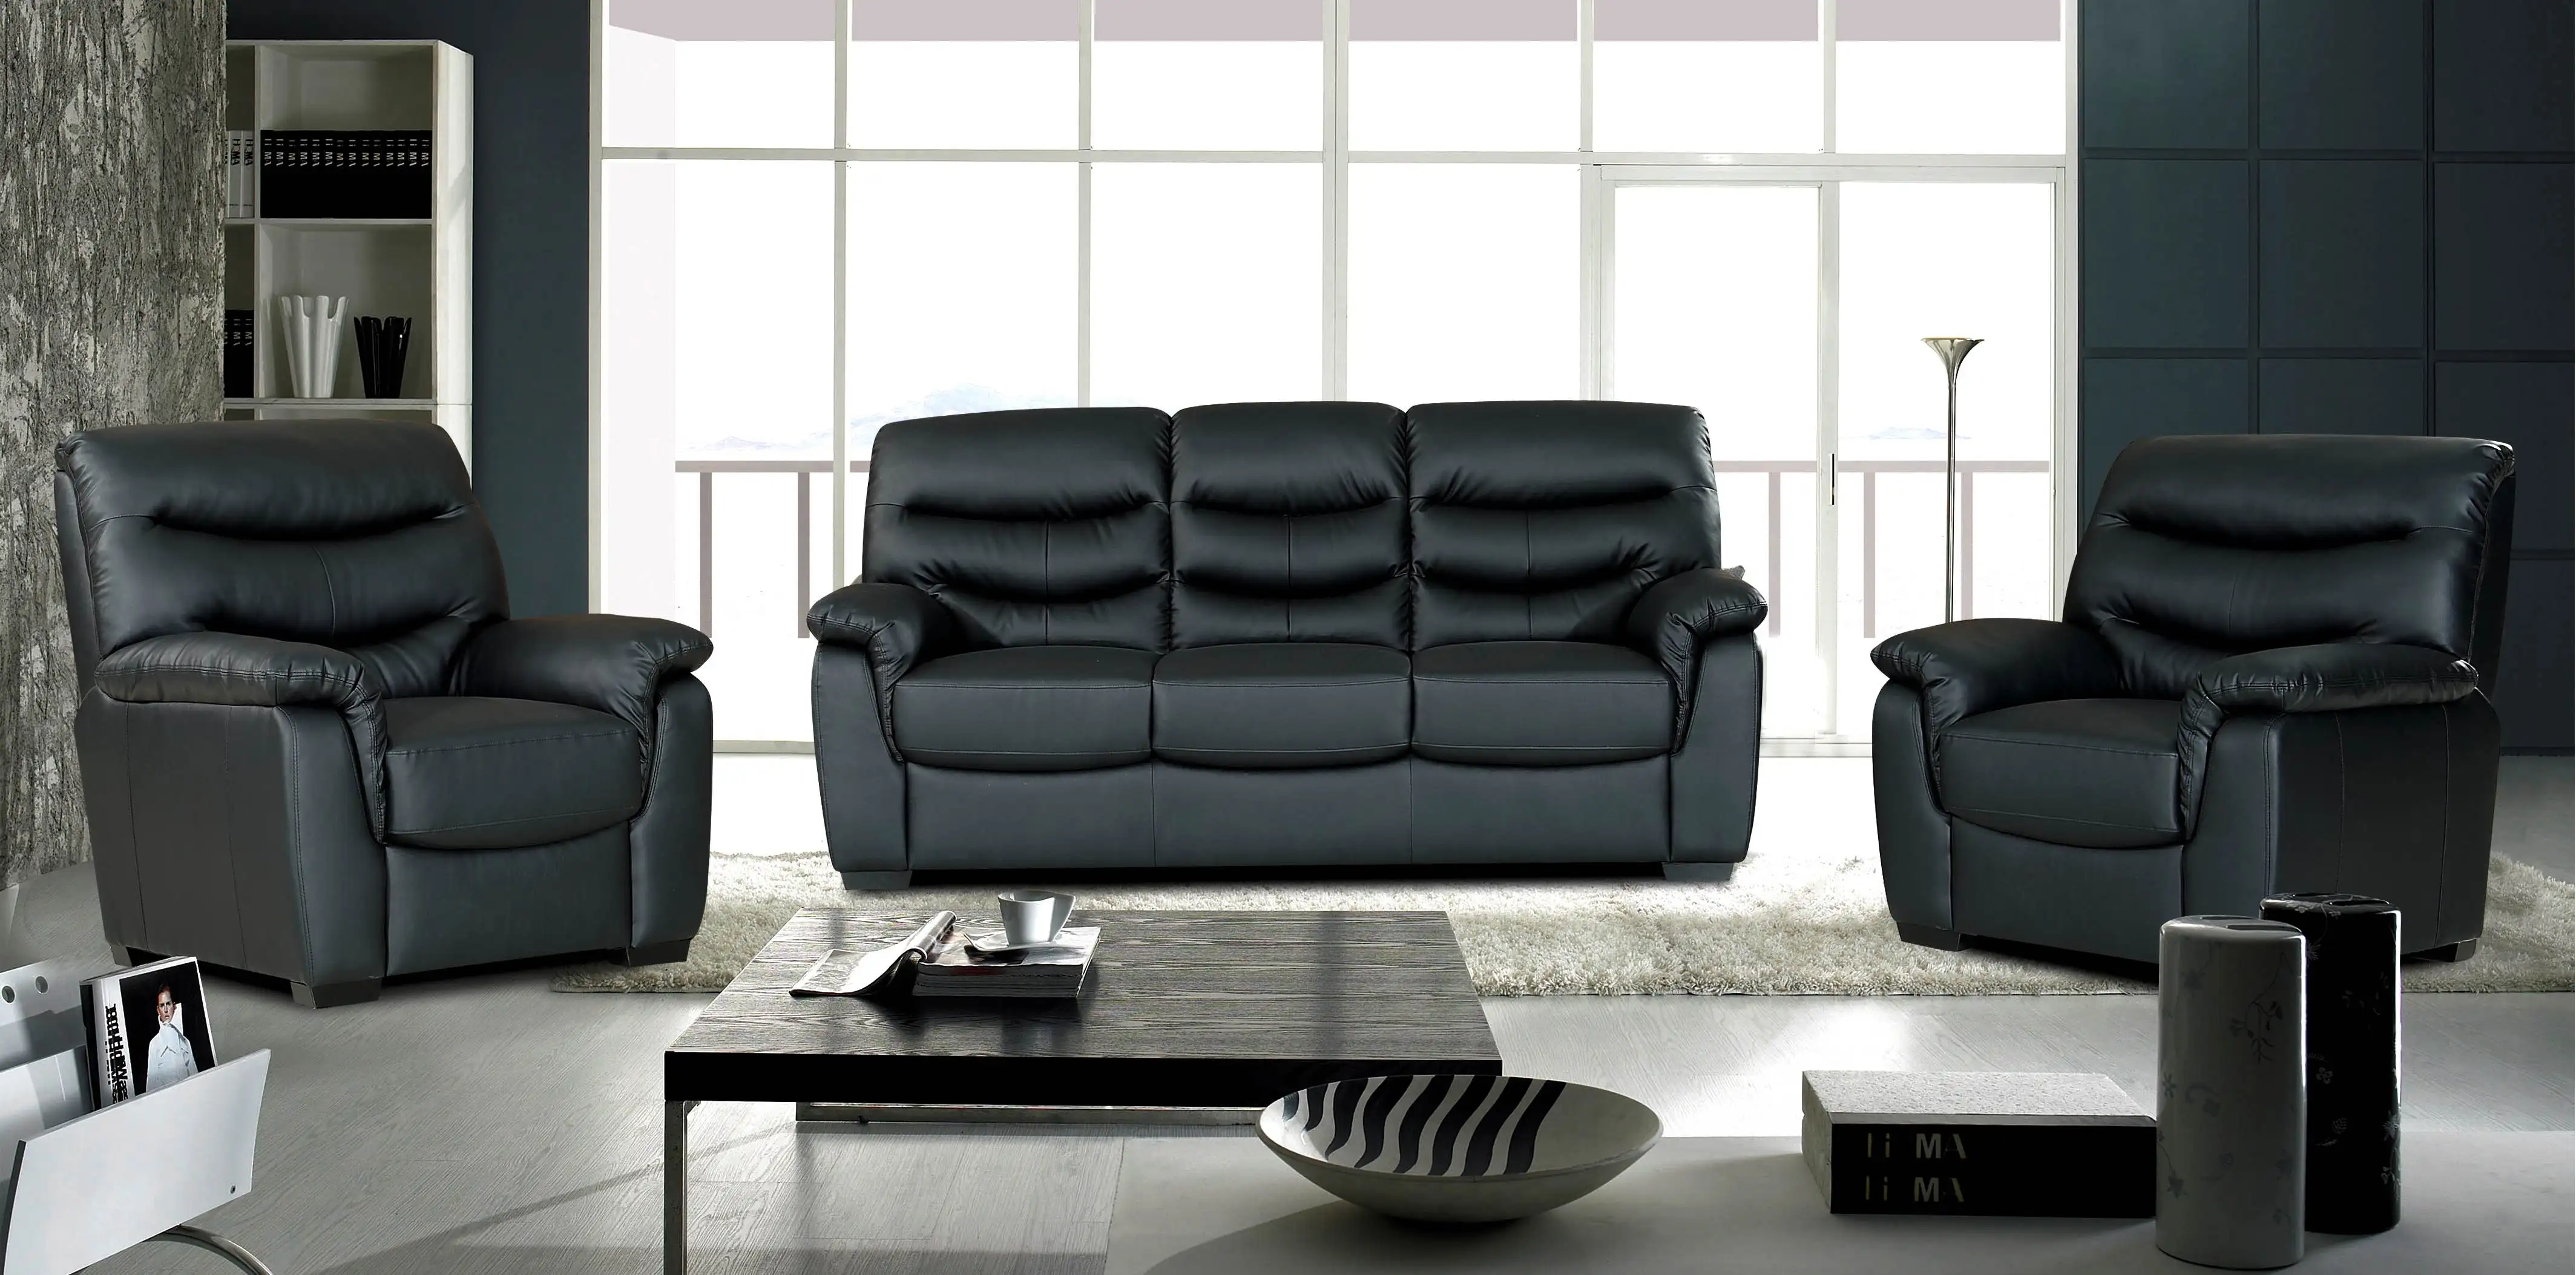 Frank Furniture Elderly Leather Sofa Set Designs Soft Comfortable 3 2 ...